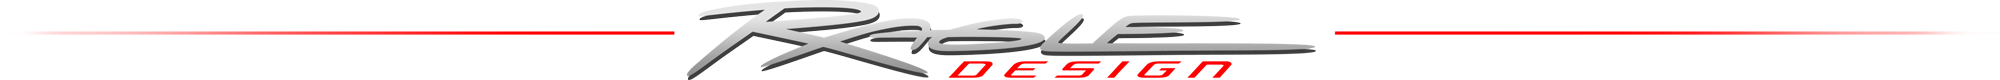 Gary Ragle | Full-Throttle Vehicle Design logo